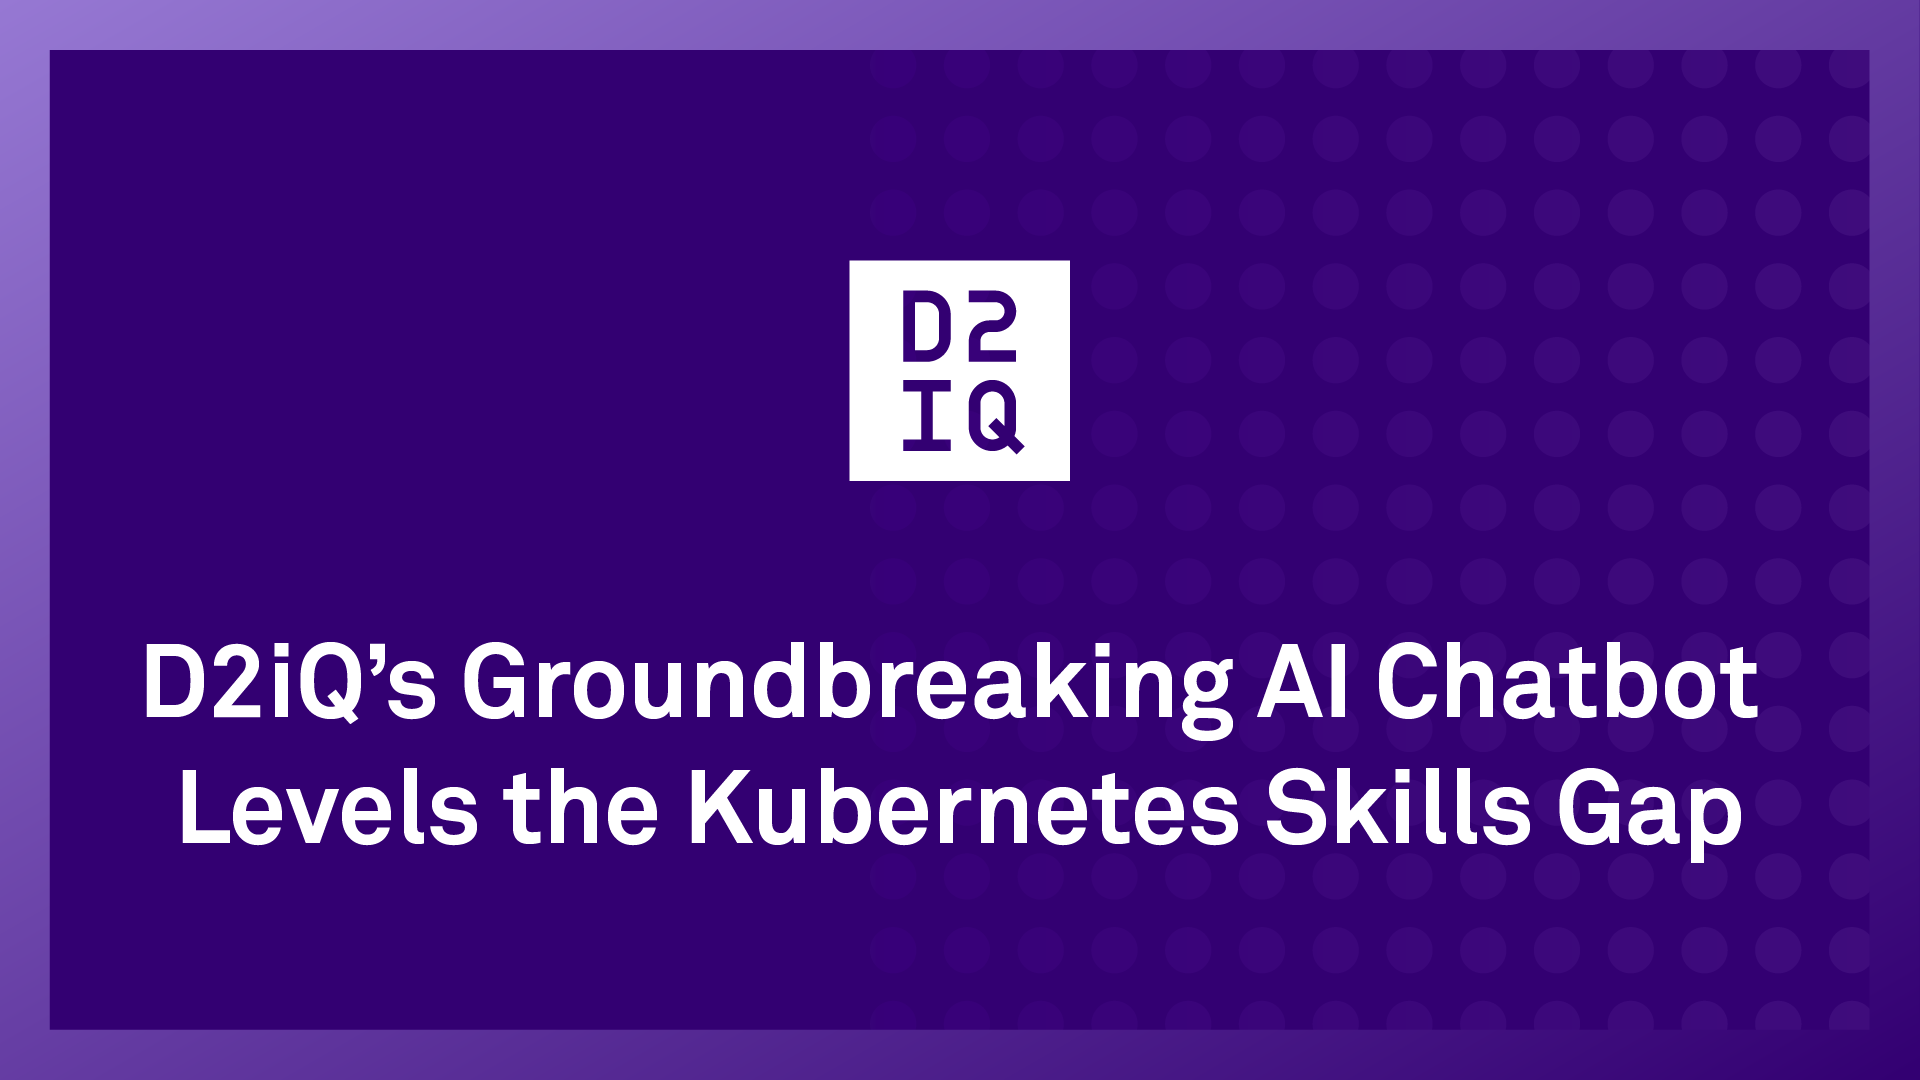 D2iQ’s Groundbreaking AI Chatbot Levels the Kubernetes Skills Gap